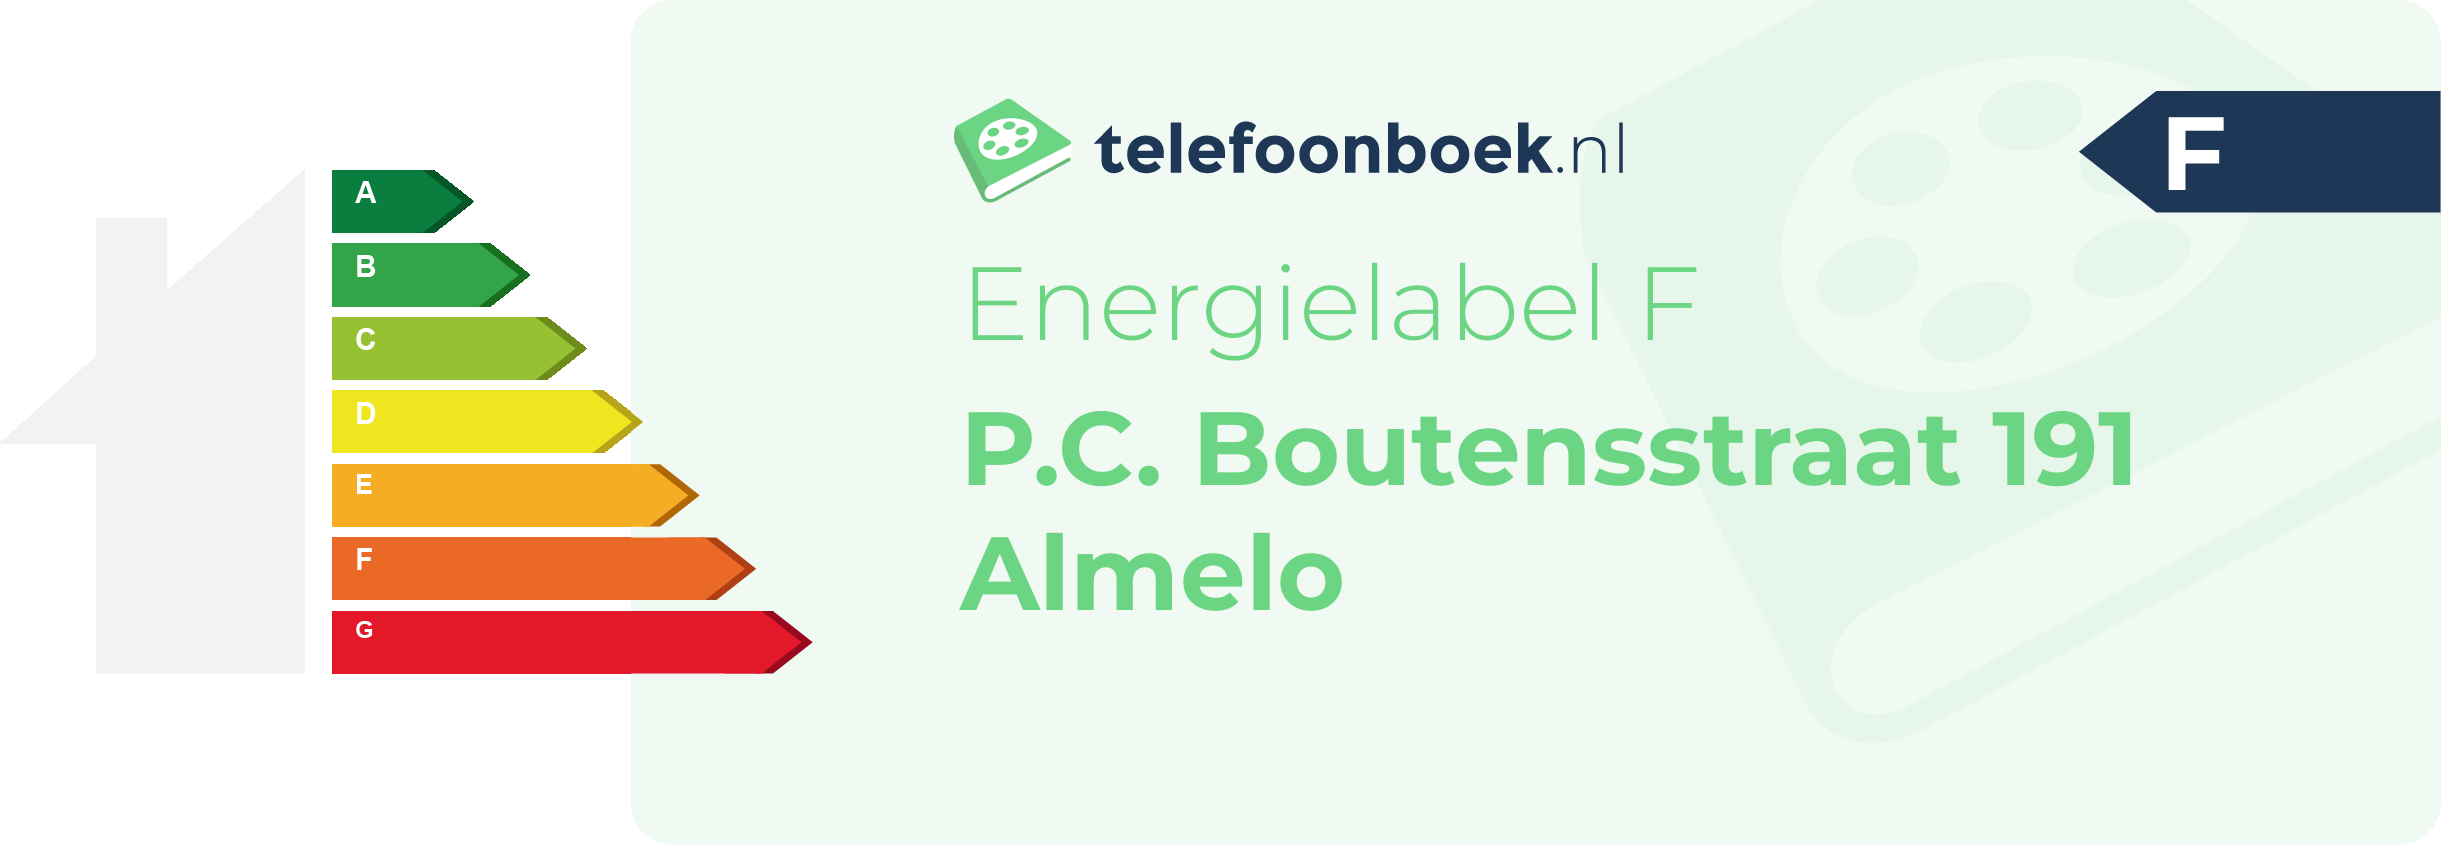 Energielabel P.C. Boutensstraat 191 Almelo